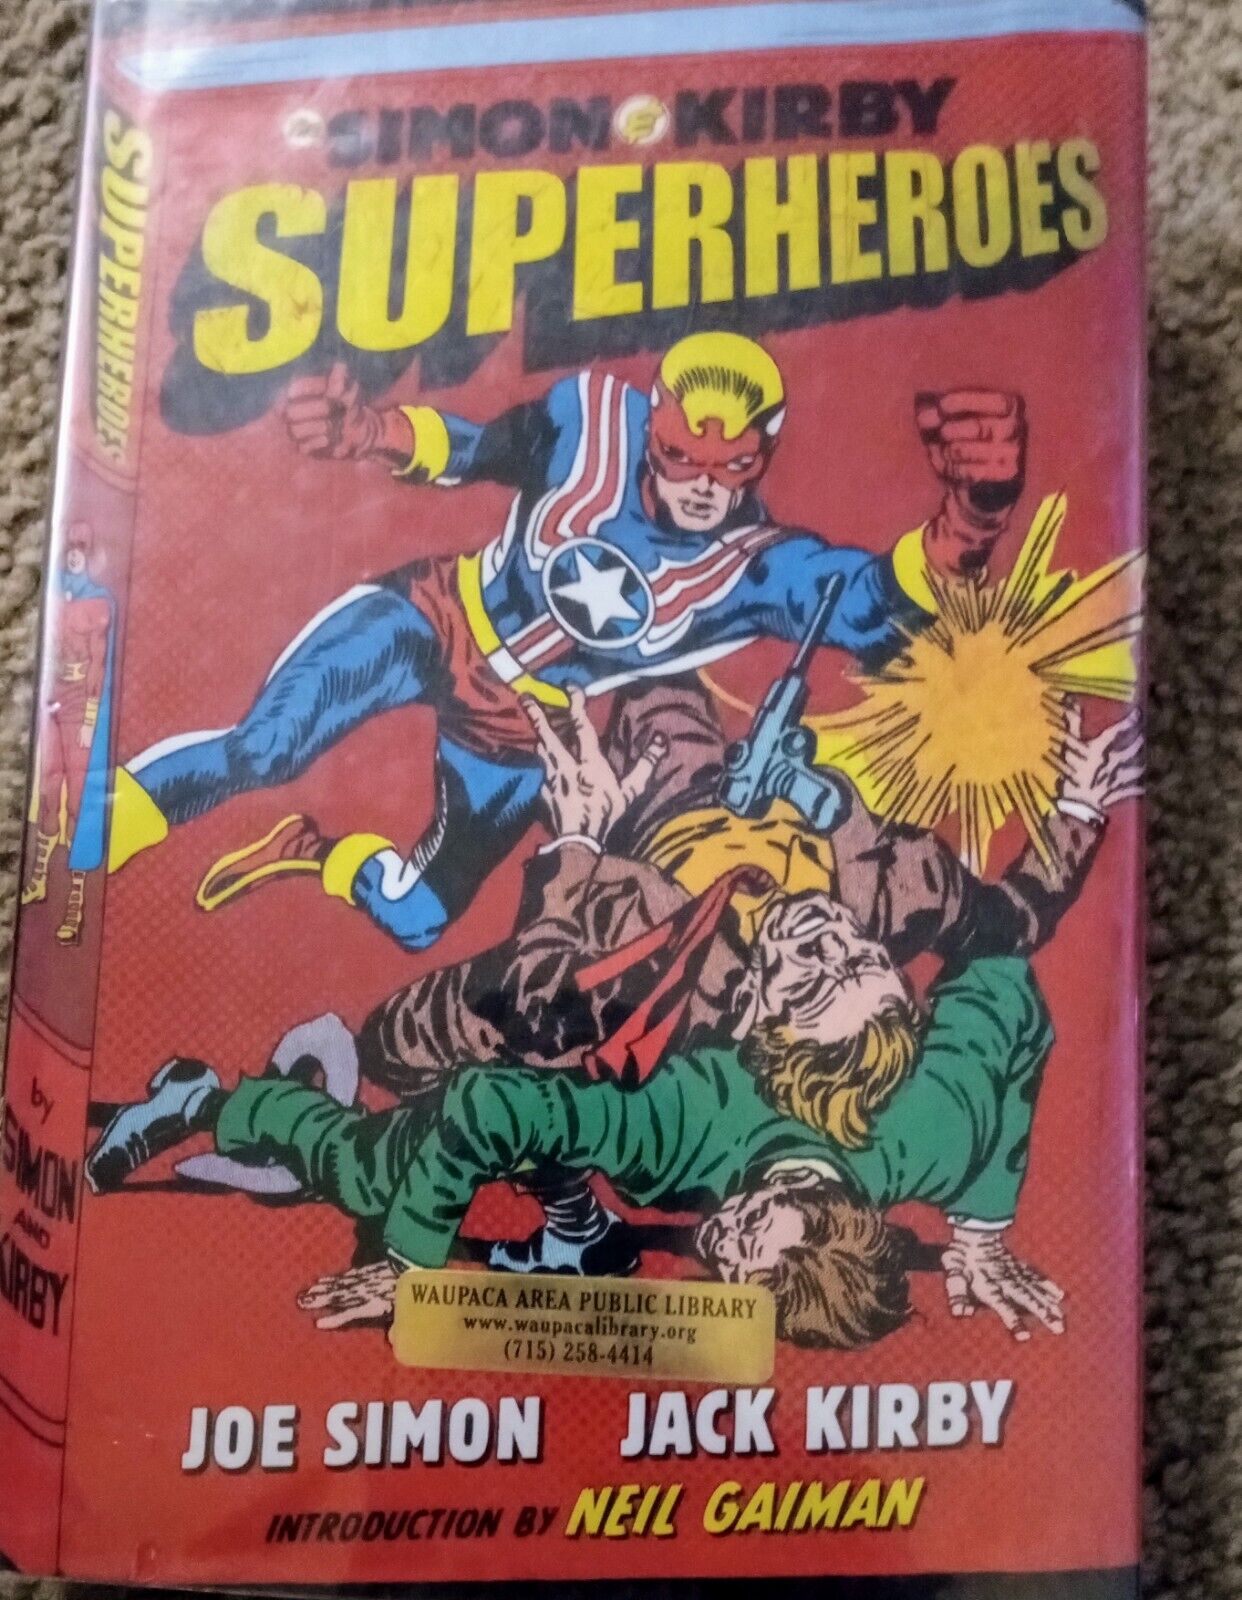 The Simon & Kirby SUPERHEROES - Joe Simon and Jack Kirby - Hardcover